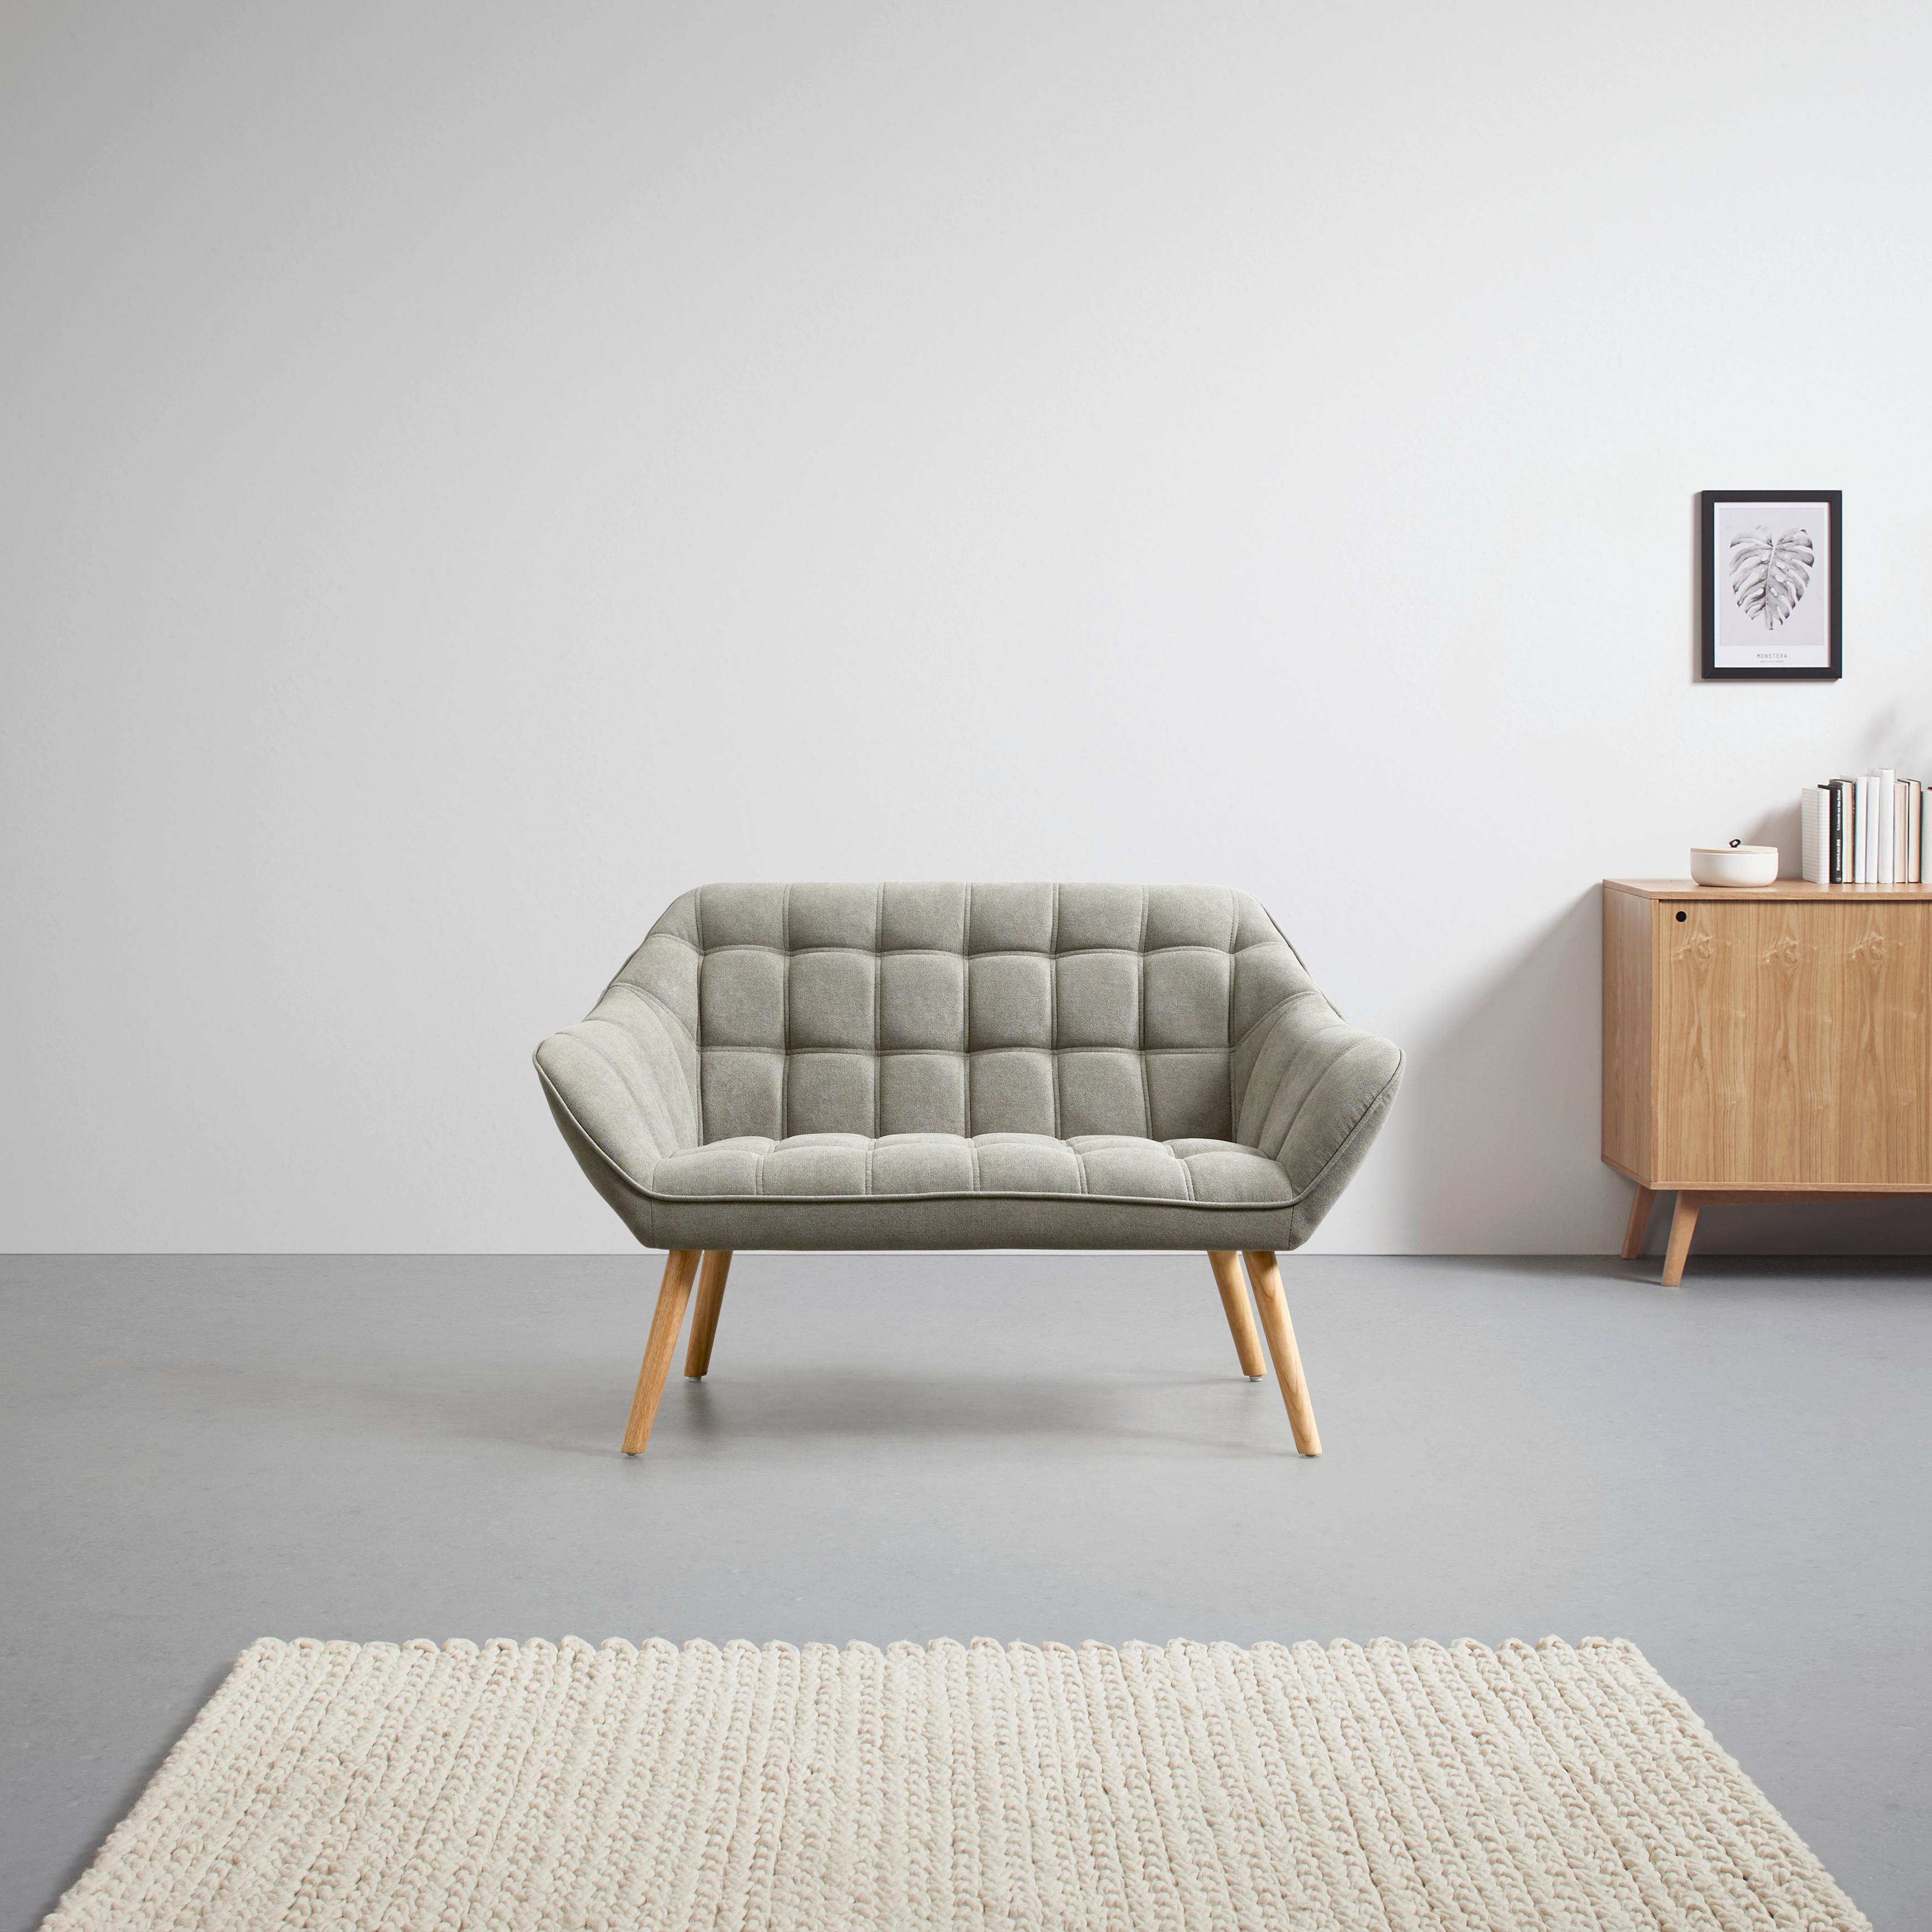 Sofa grau, "Monique" - Grau, MODERN, Holz/Textil (127/76/74,5cm) - Bessagi Home